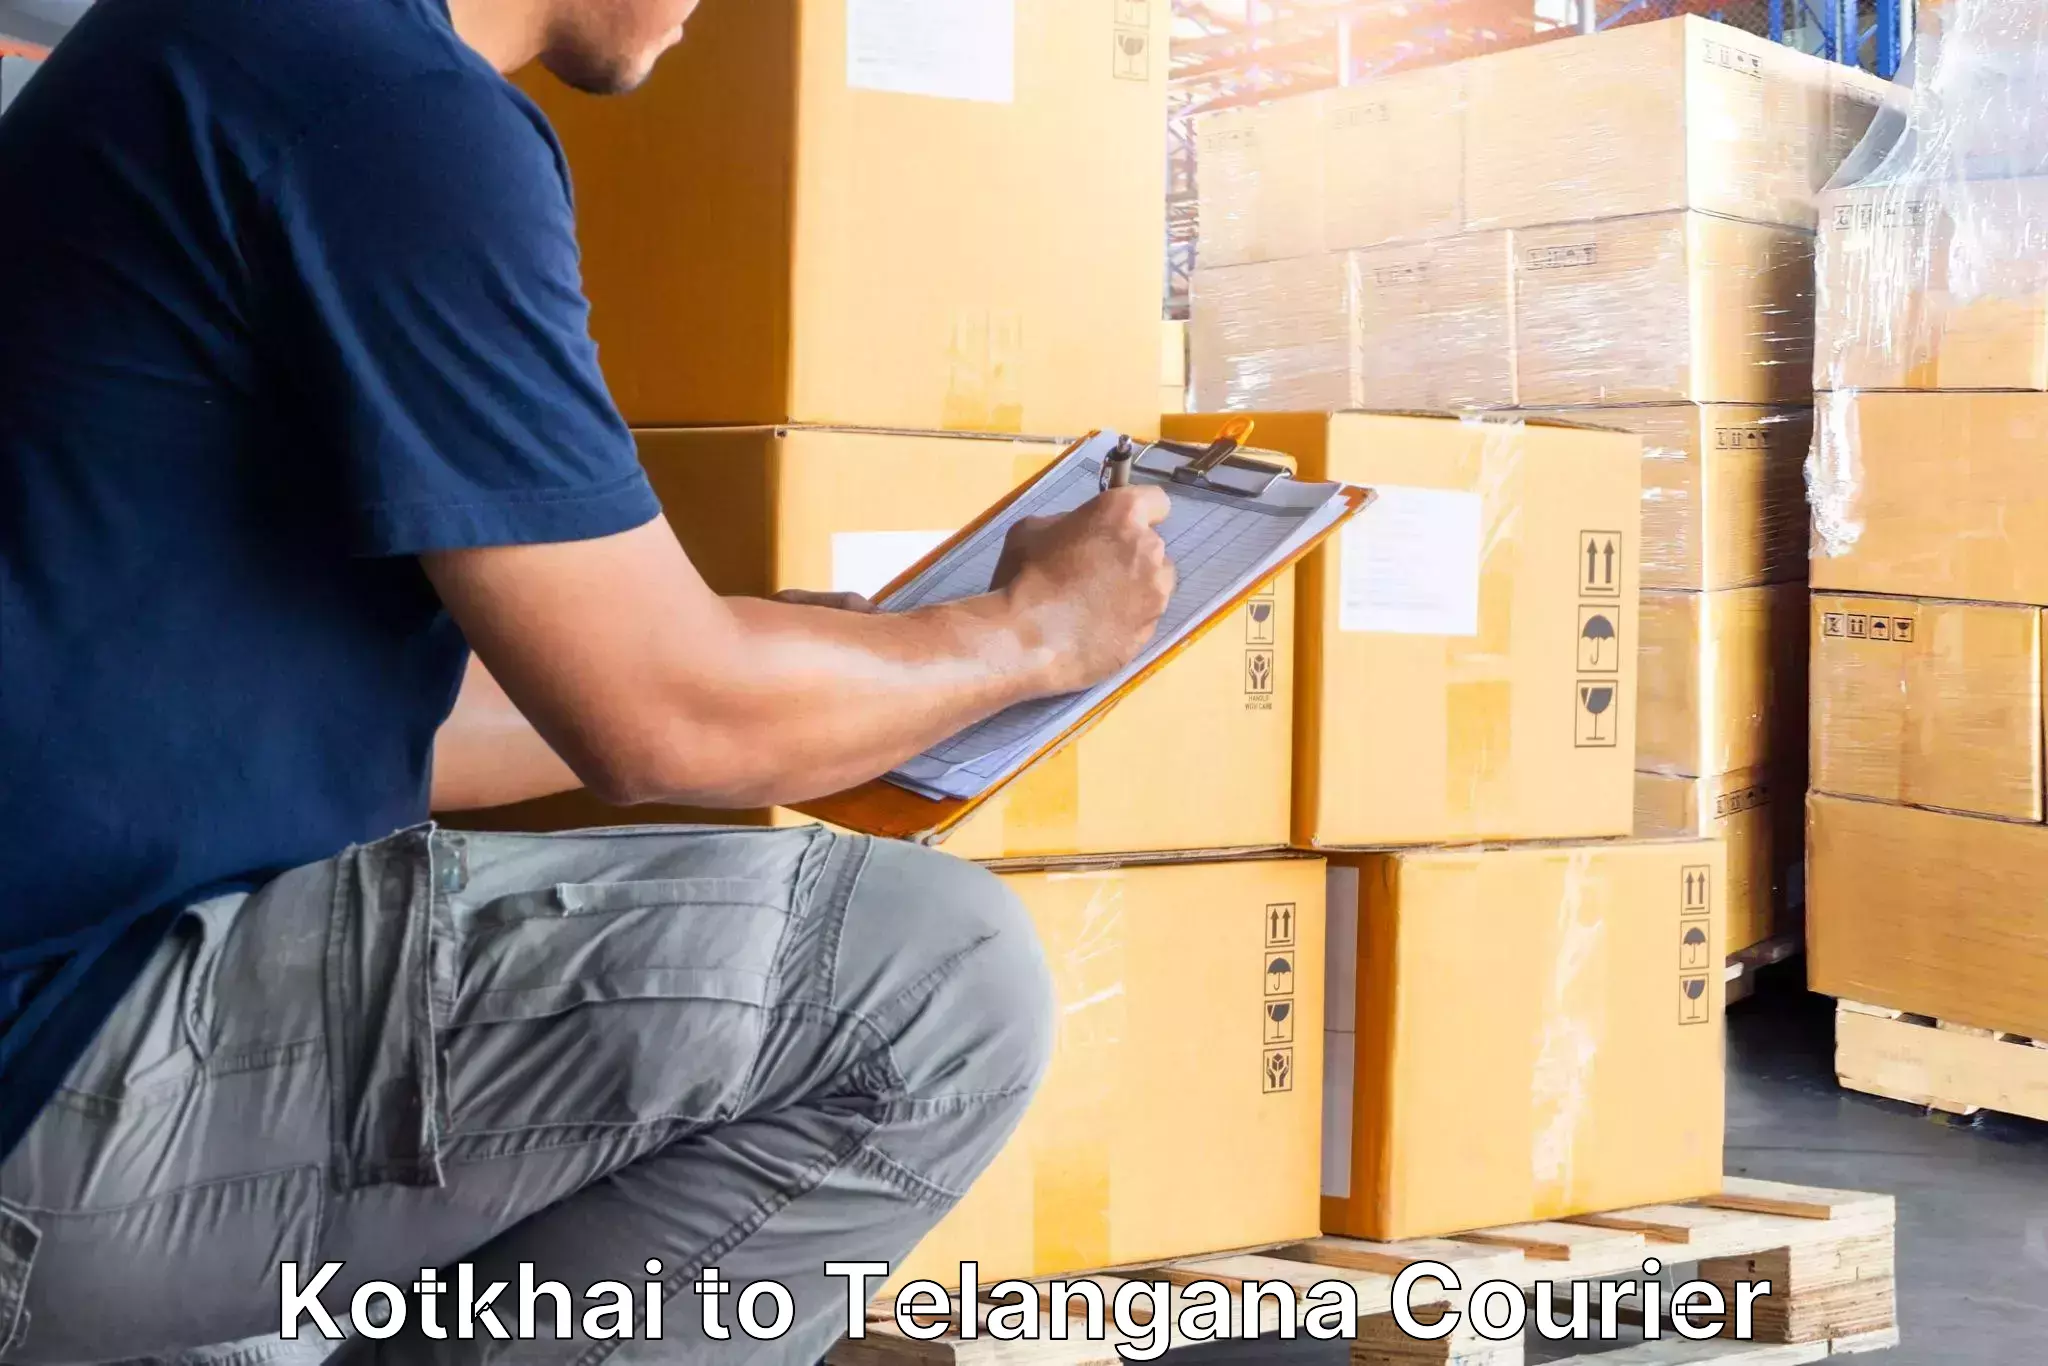 Professional moving company in Kotkhai to Telangana